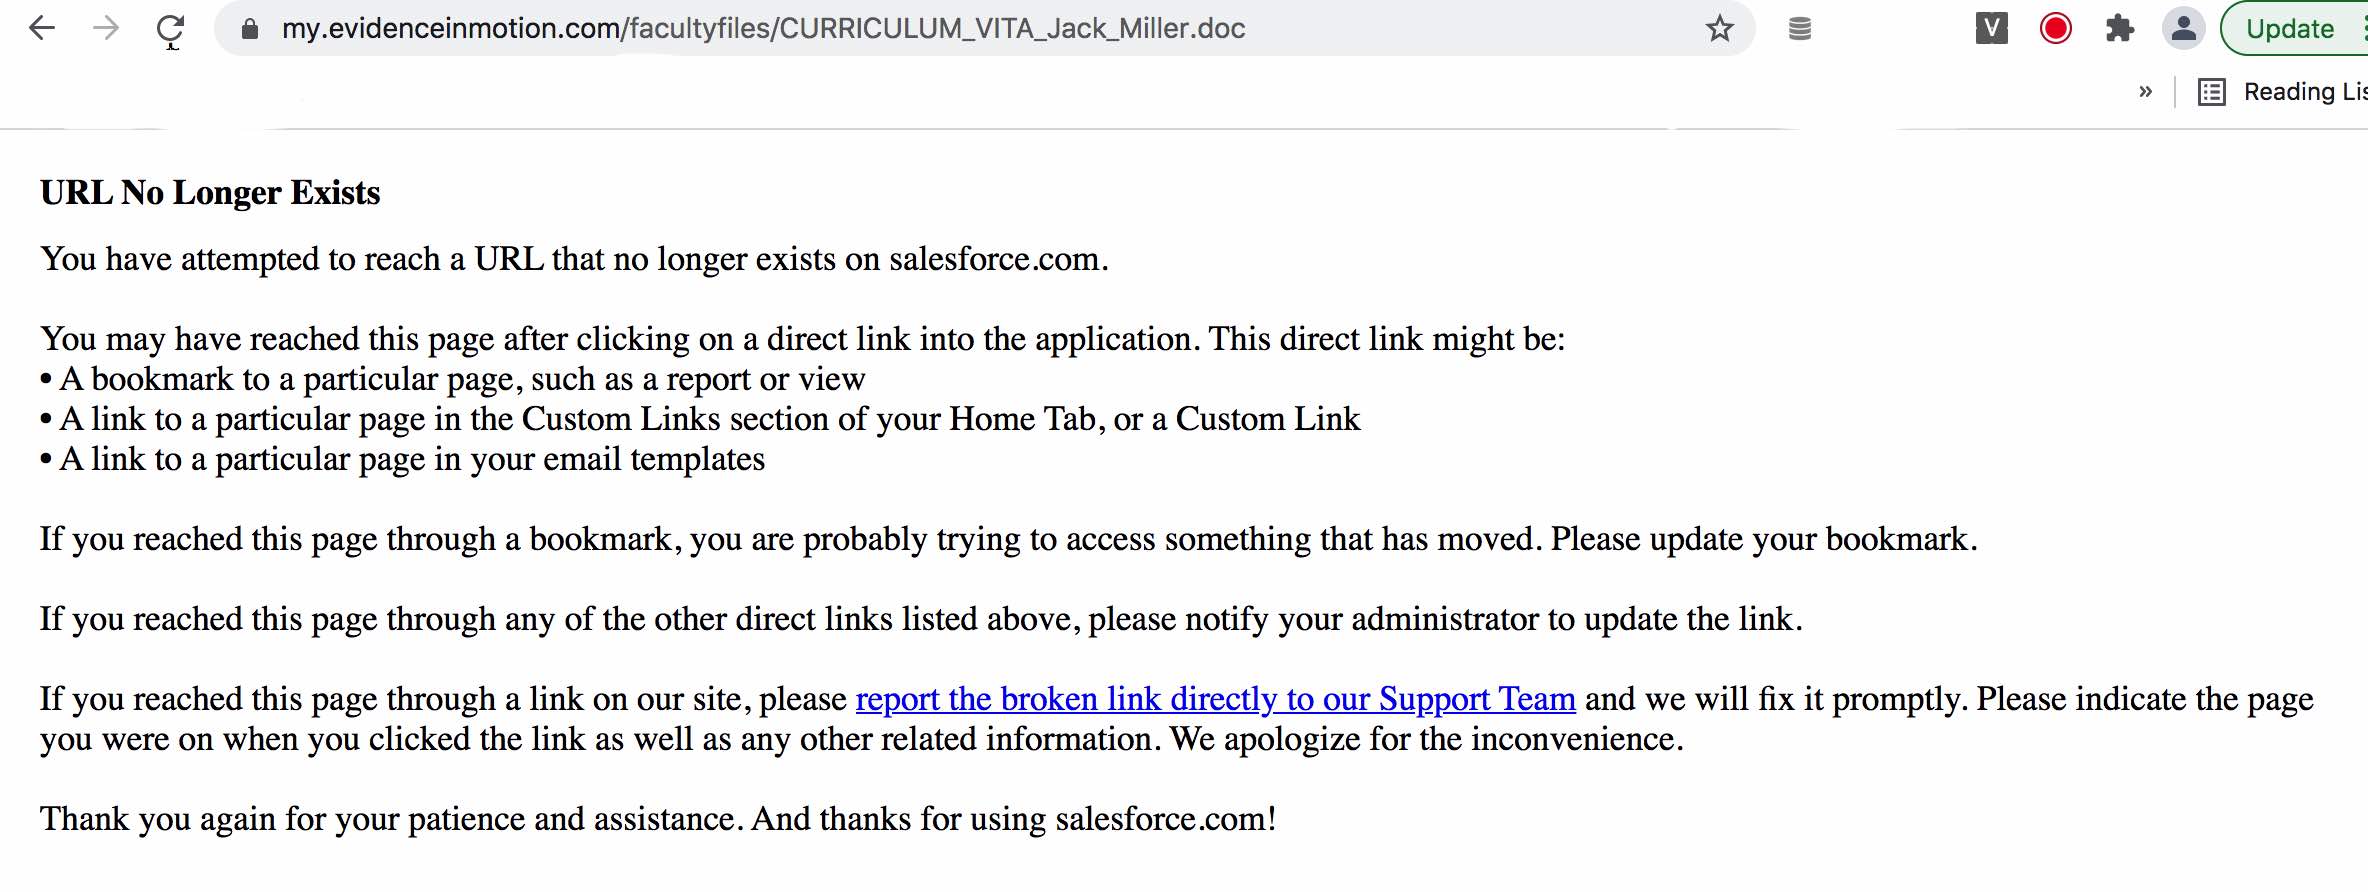 Jack Miller uncontrolled email rants